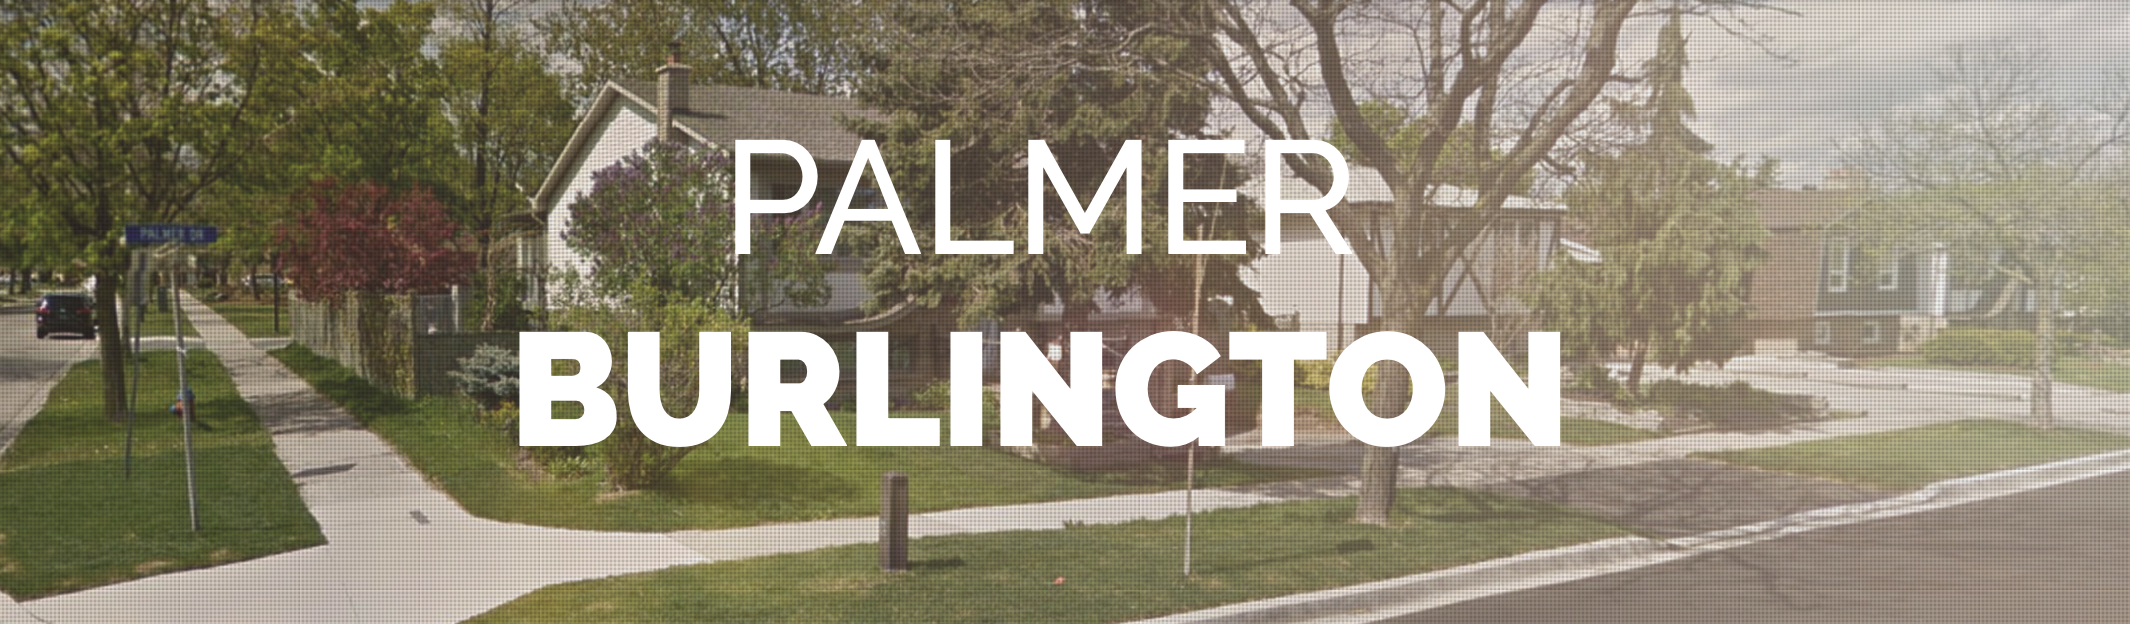 Explore Burlington - Palmer neighbourhood with The Mink Group real estate.